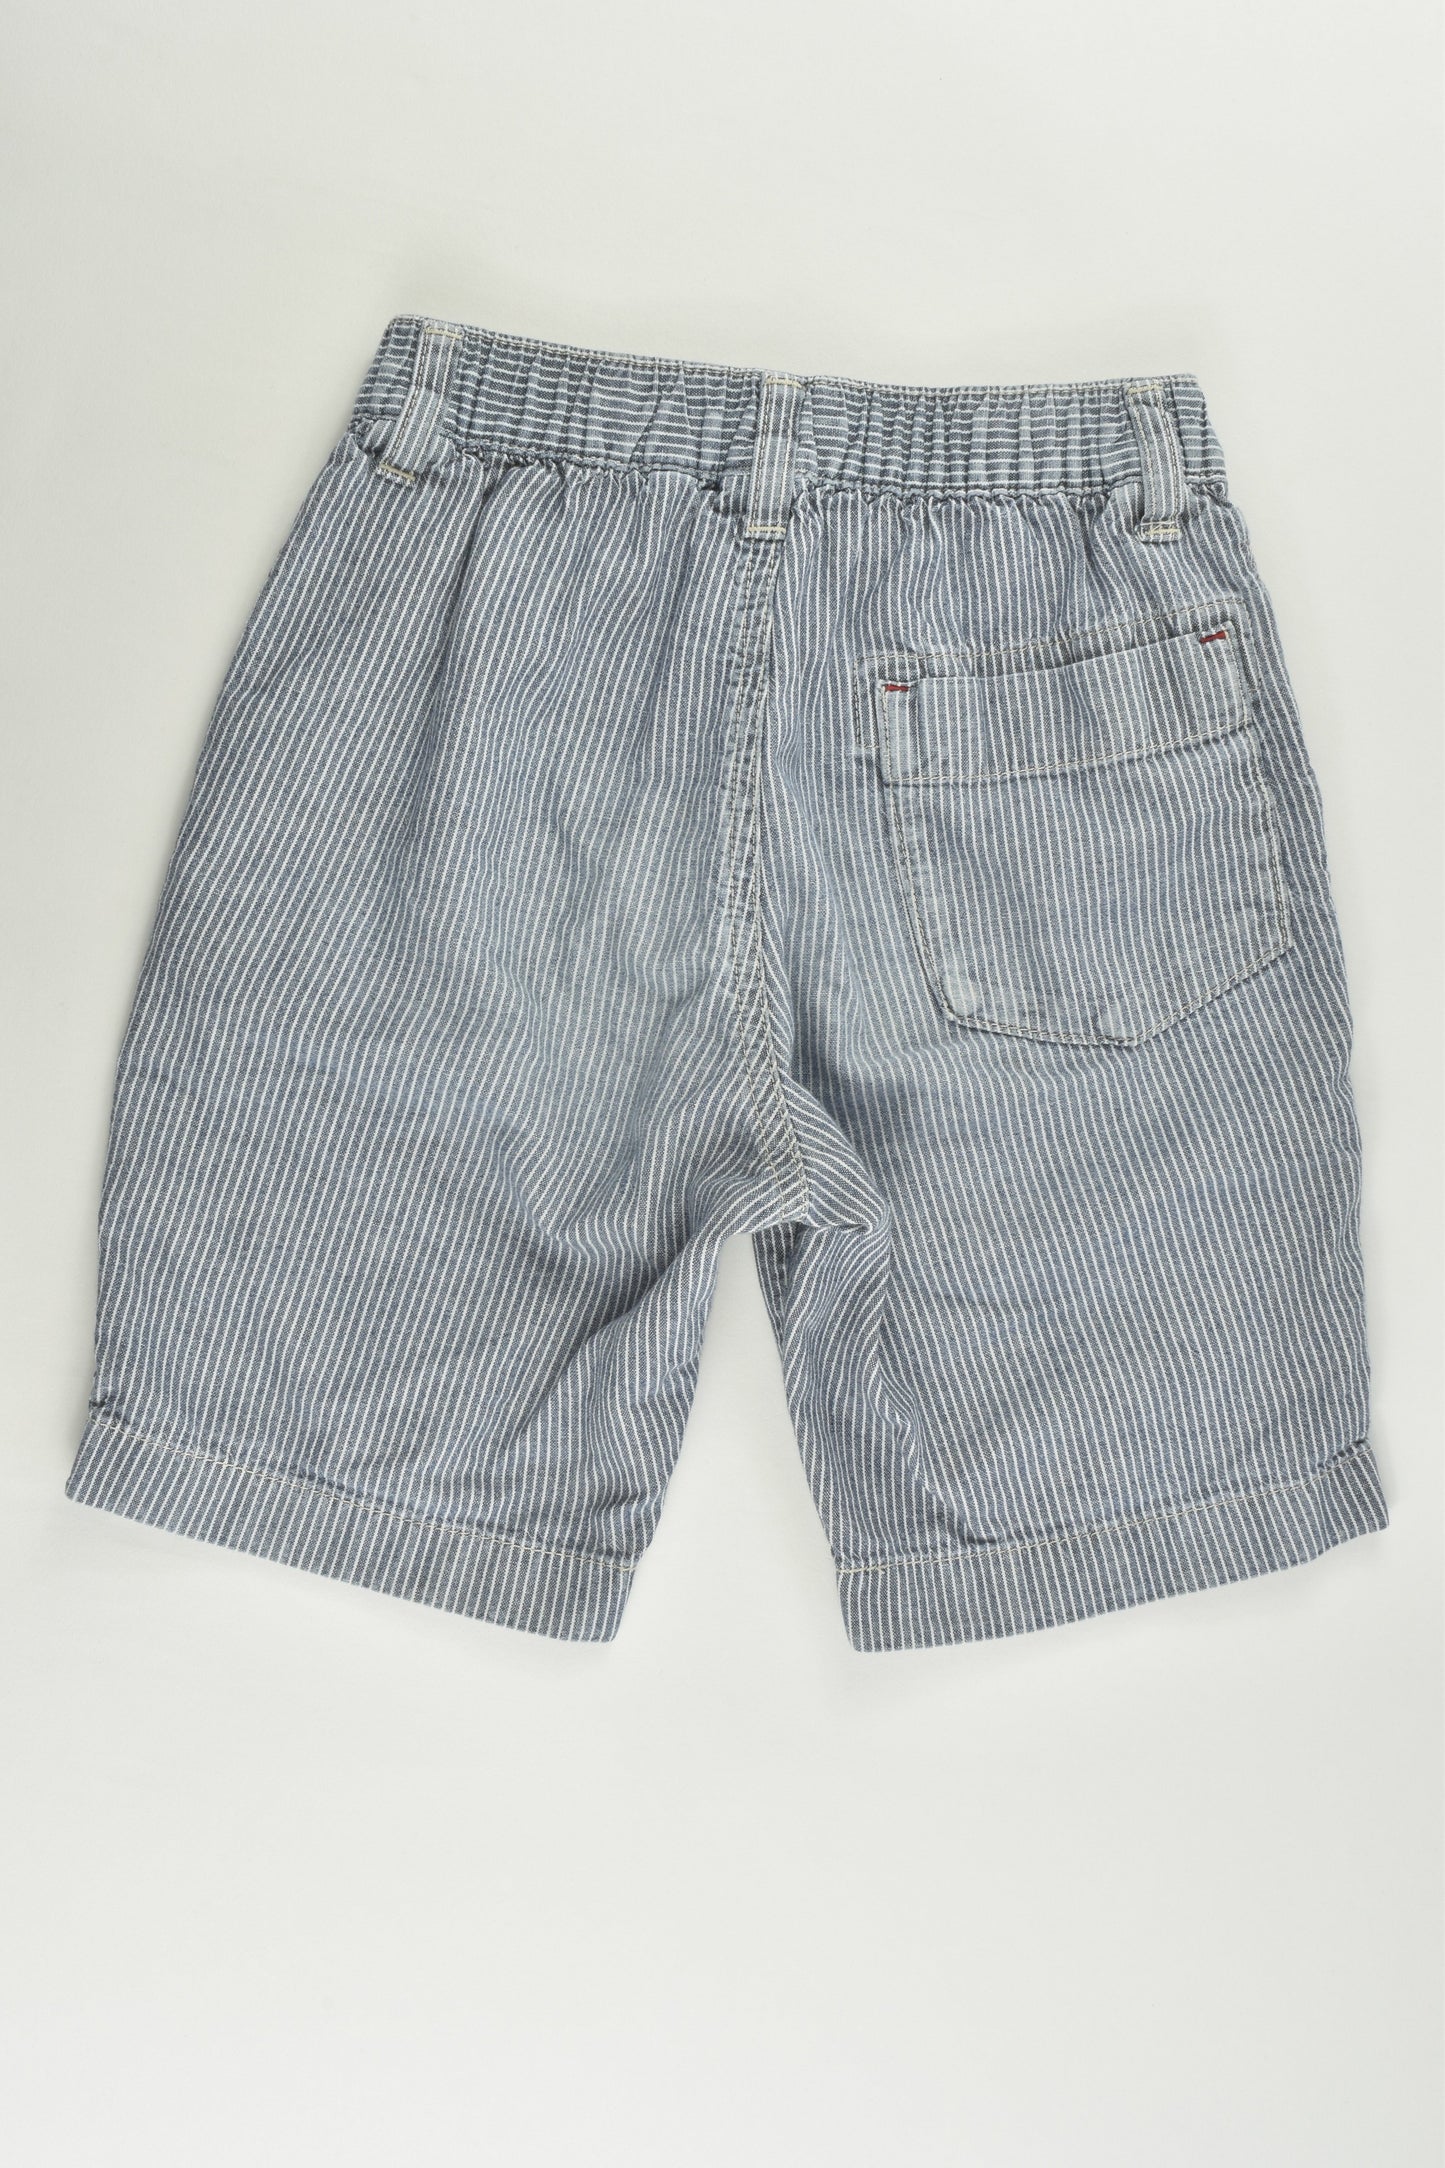 Uniqlo Size 5-6 Lightweight Striped Shorts